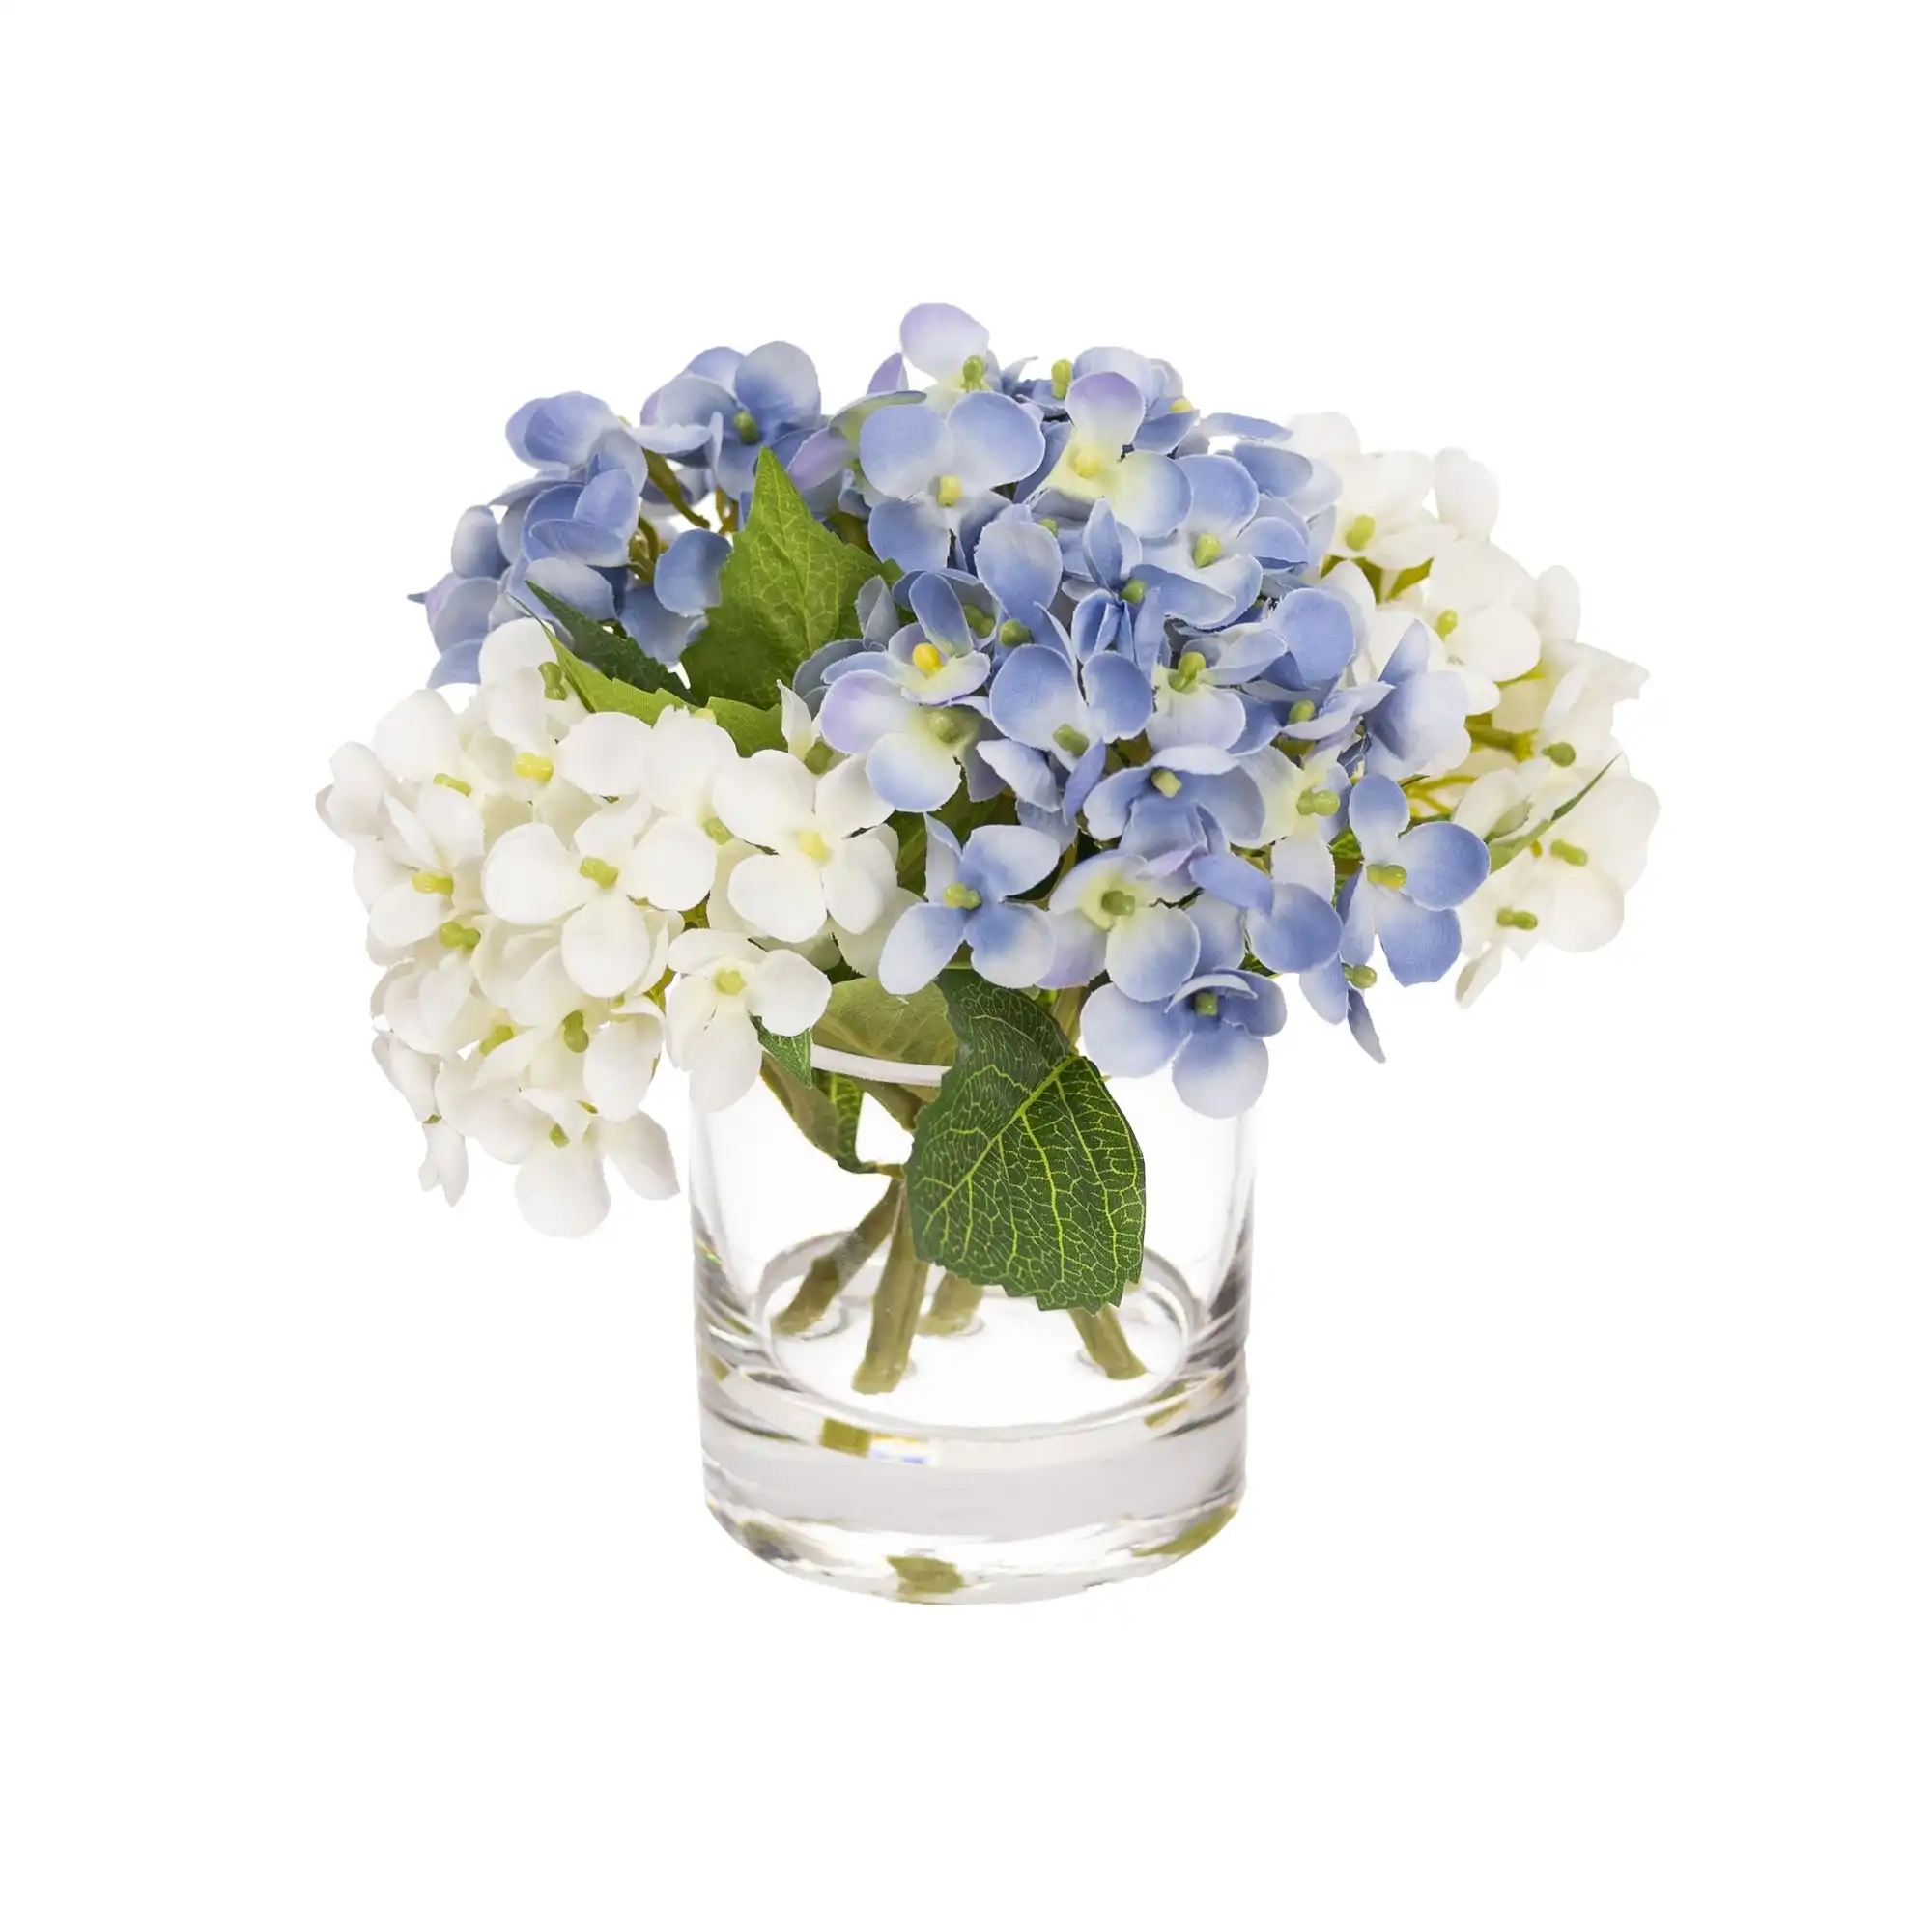 Glamorous Fusion Blue & White Hydrangea Artificial Fake Plant Decorative Mixed Arragement 18cm In Glass